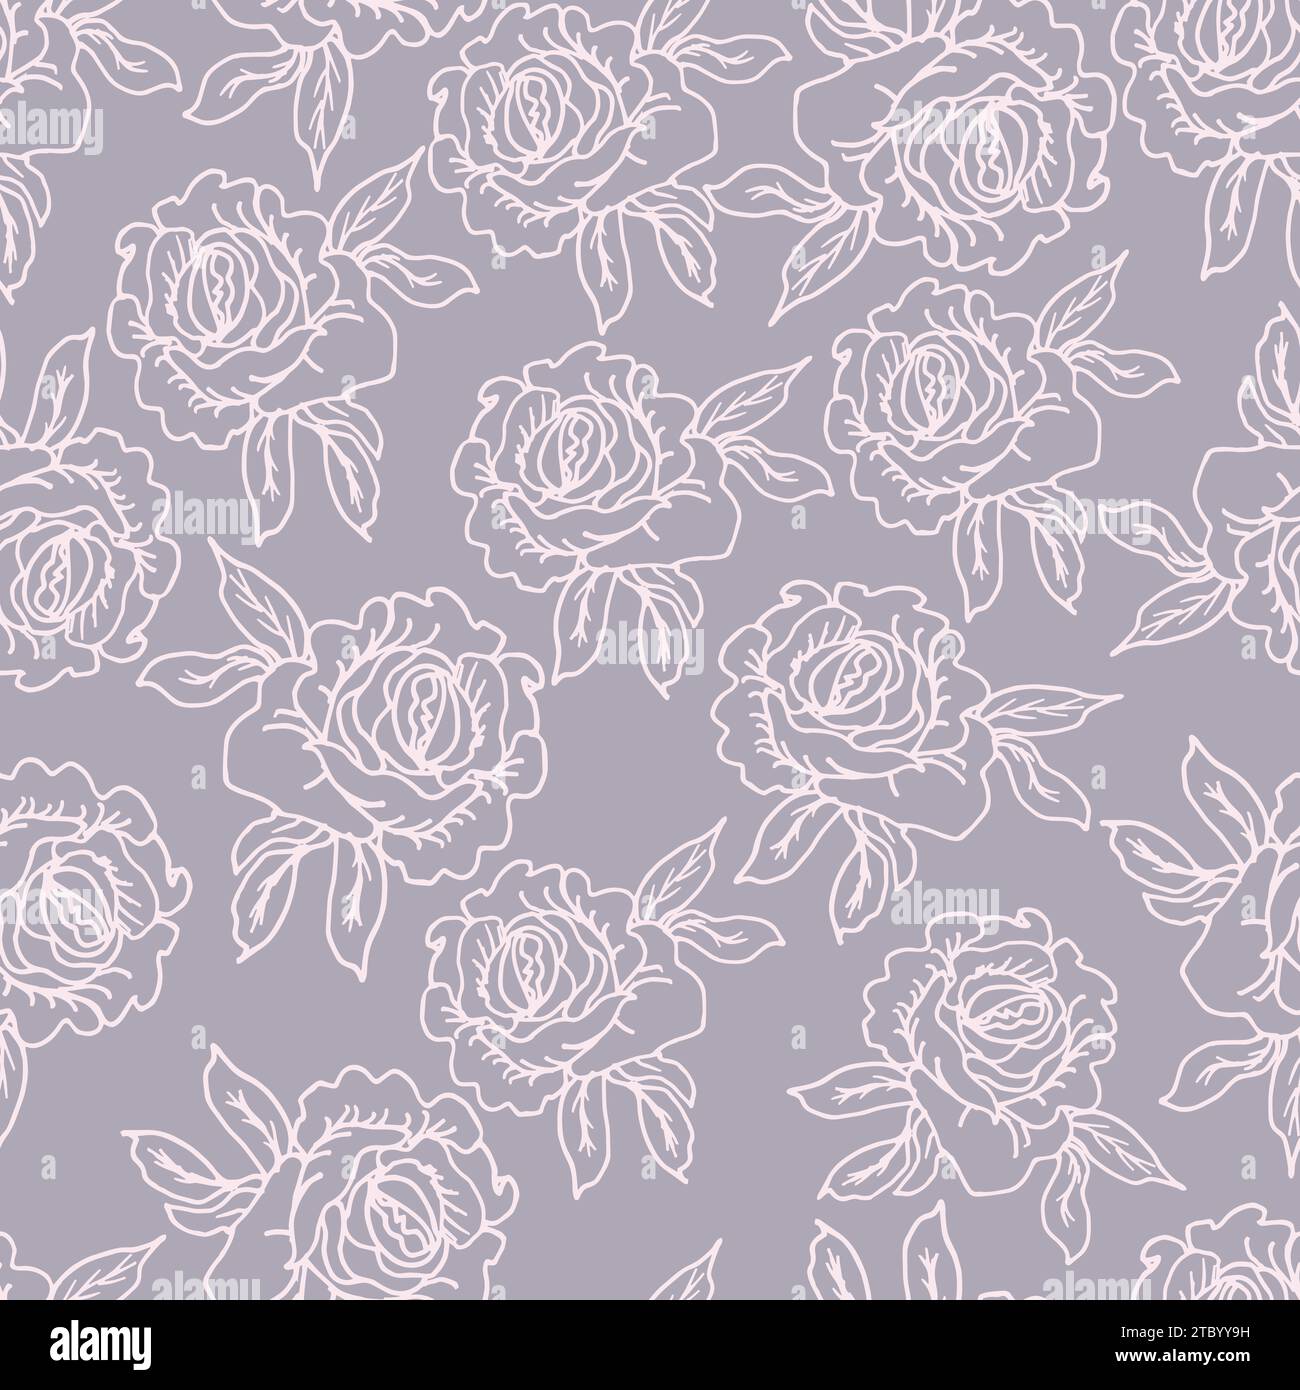 Delicate rose flower, line art hand drawn design for surface design of textile. Roses flower line art background vector. Natural botanical elegant flo Stock Vector